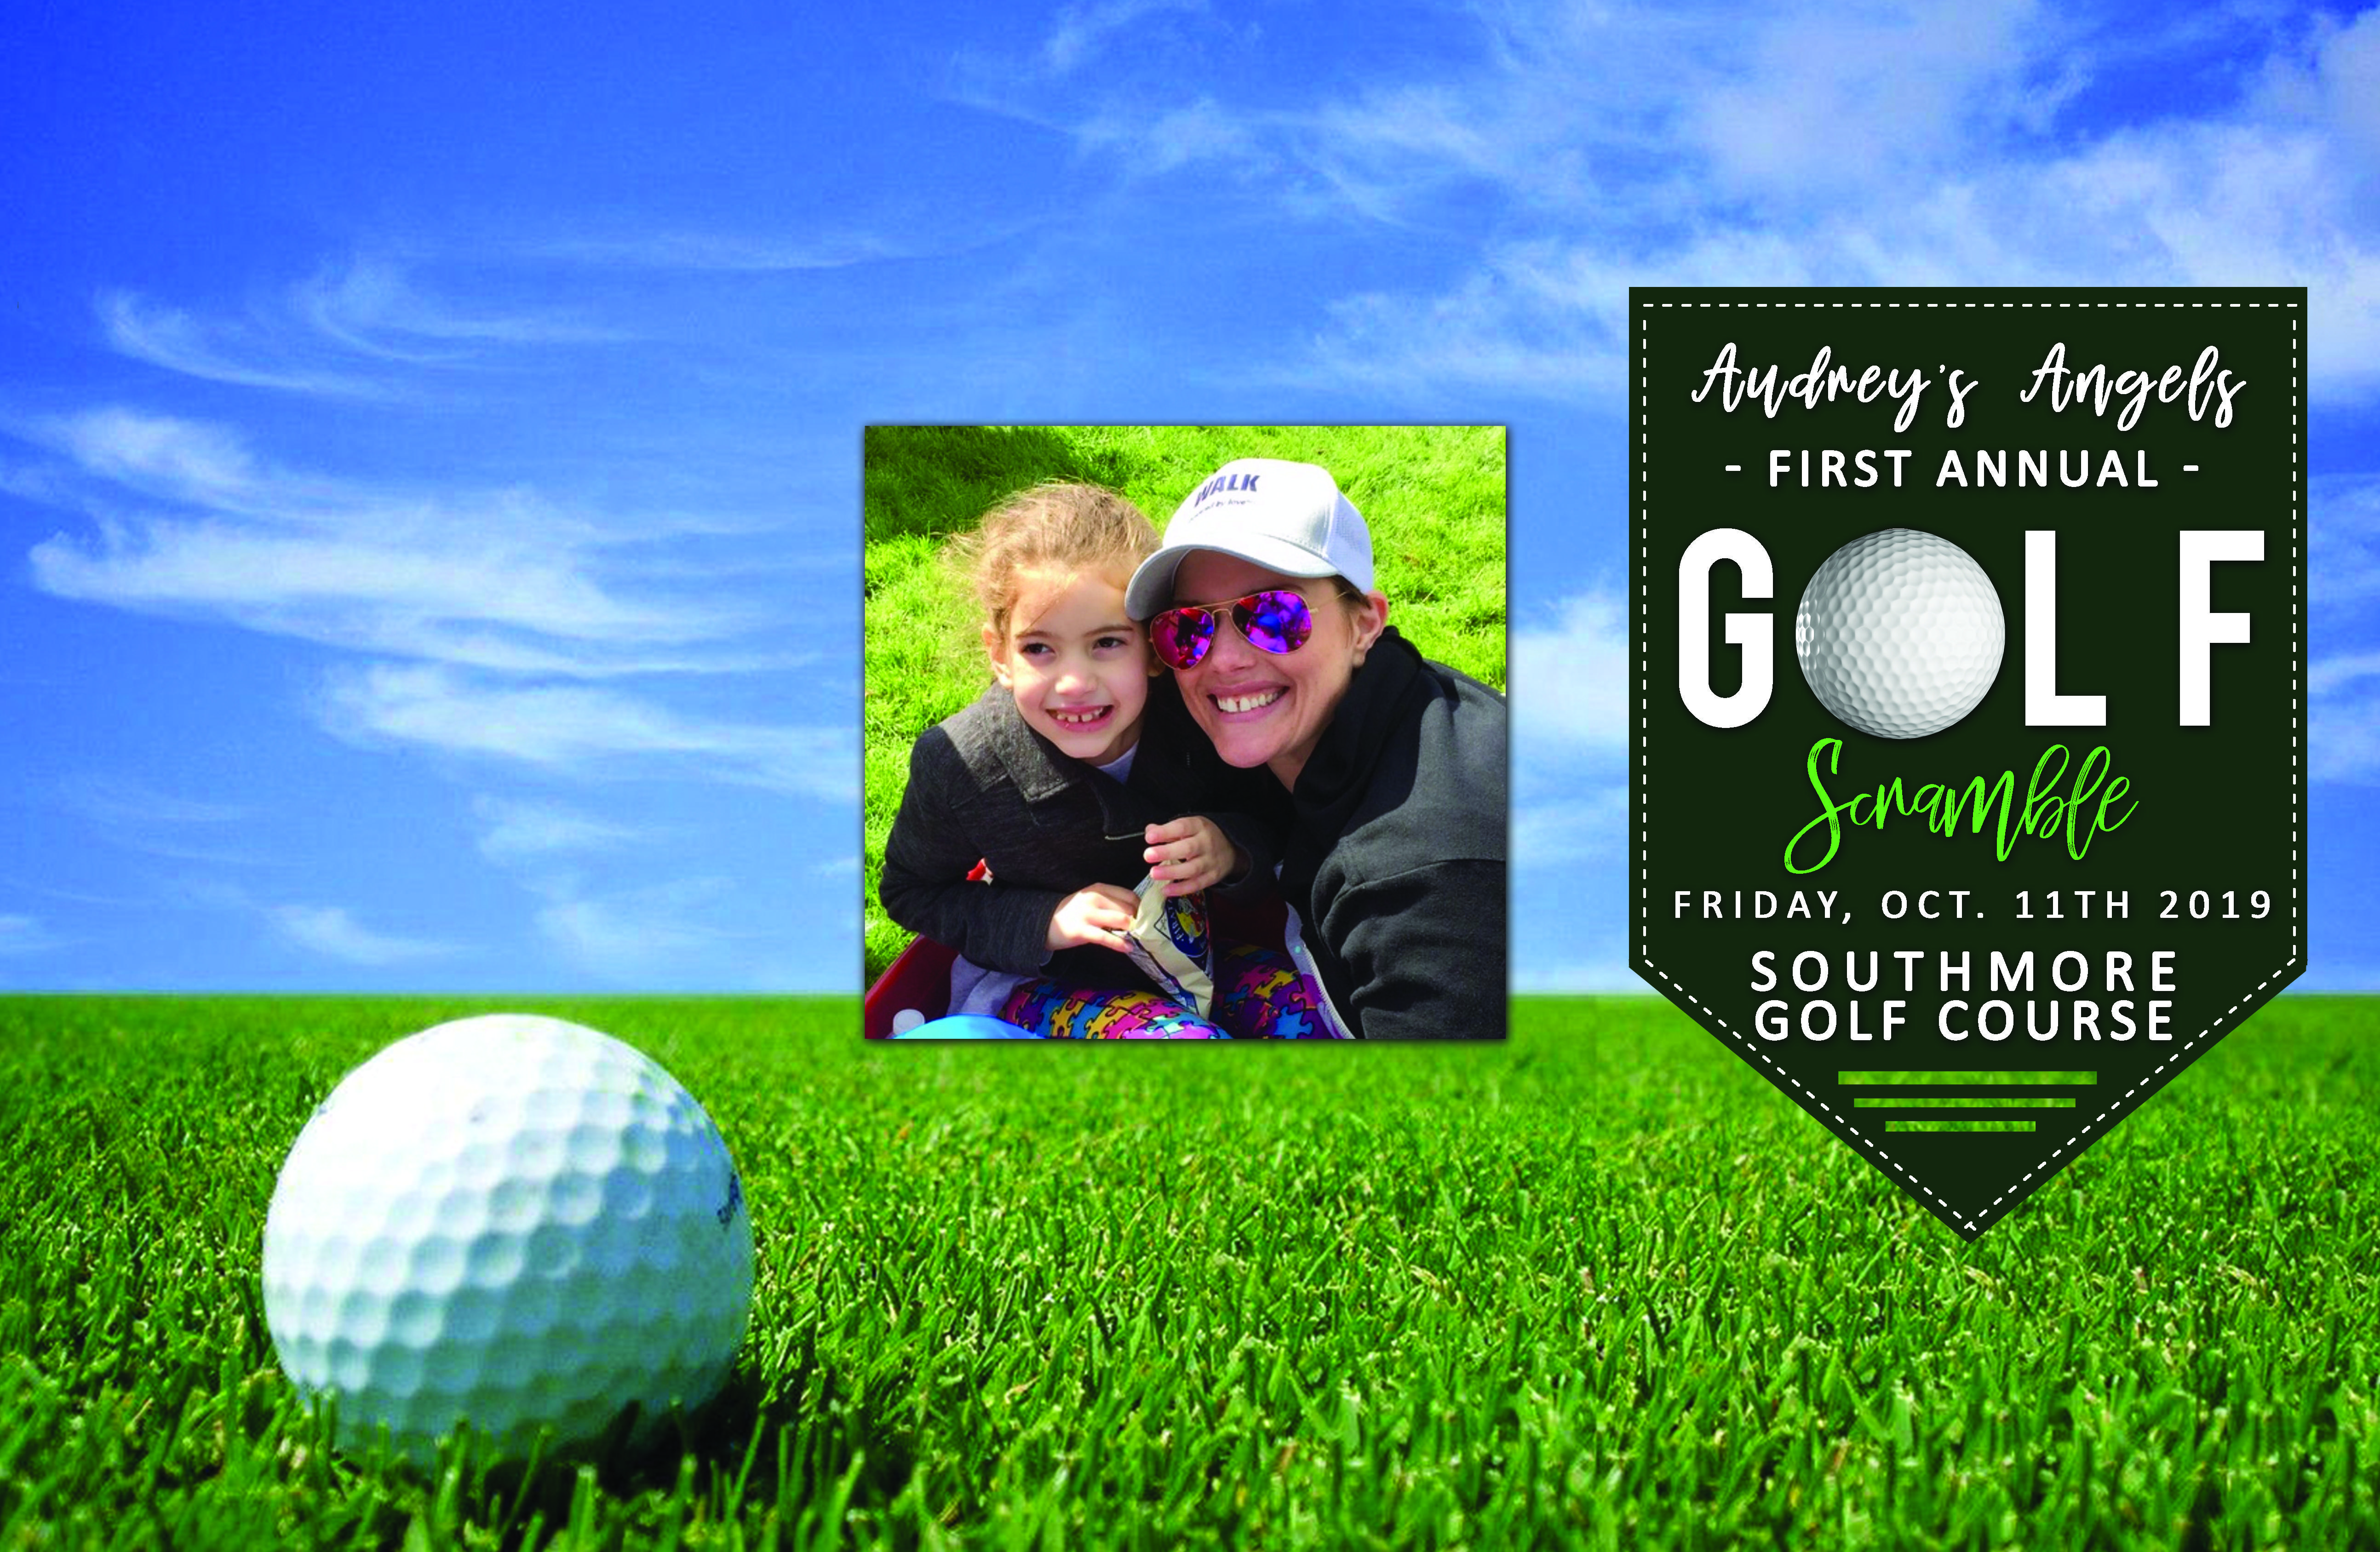 Audrey's Angels 1st Annual Golf Scramble